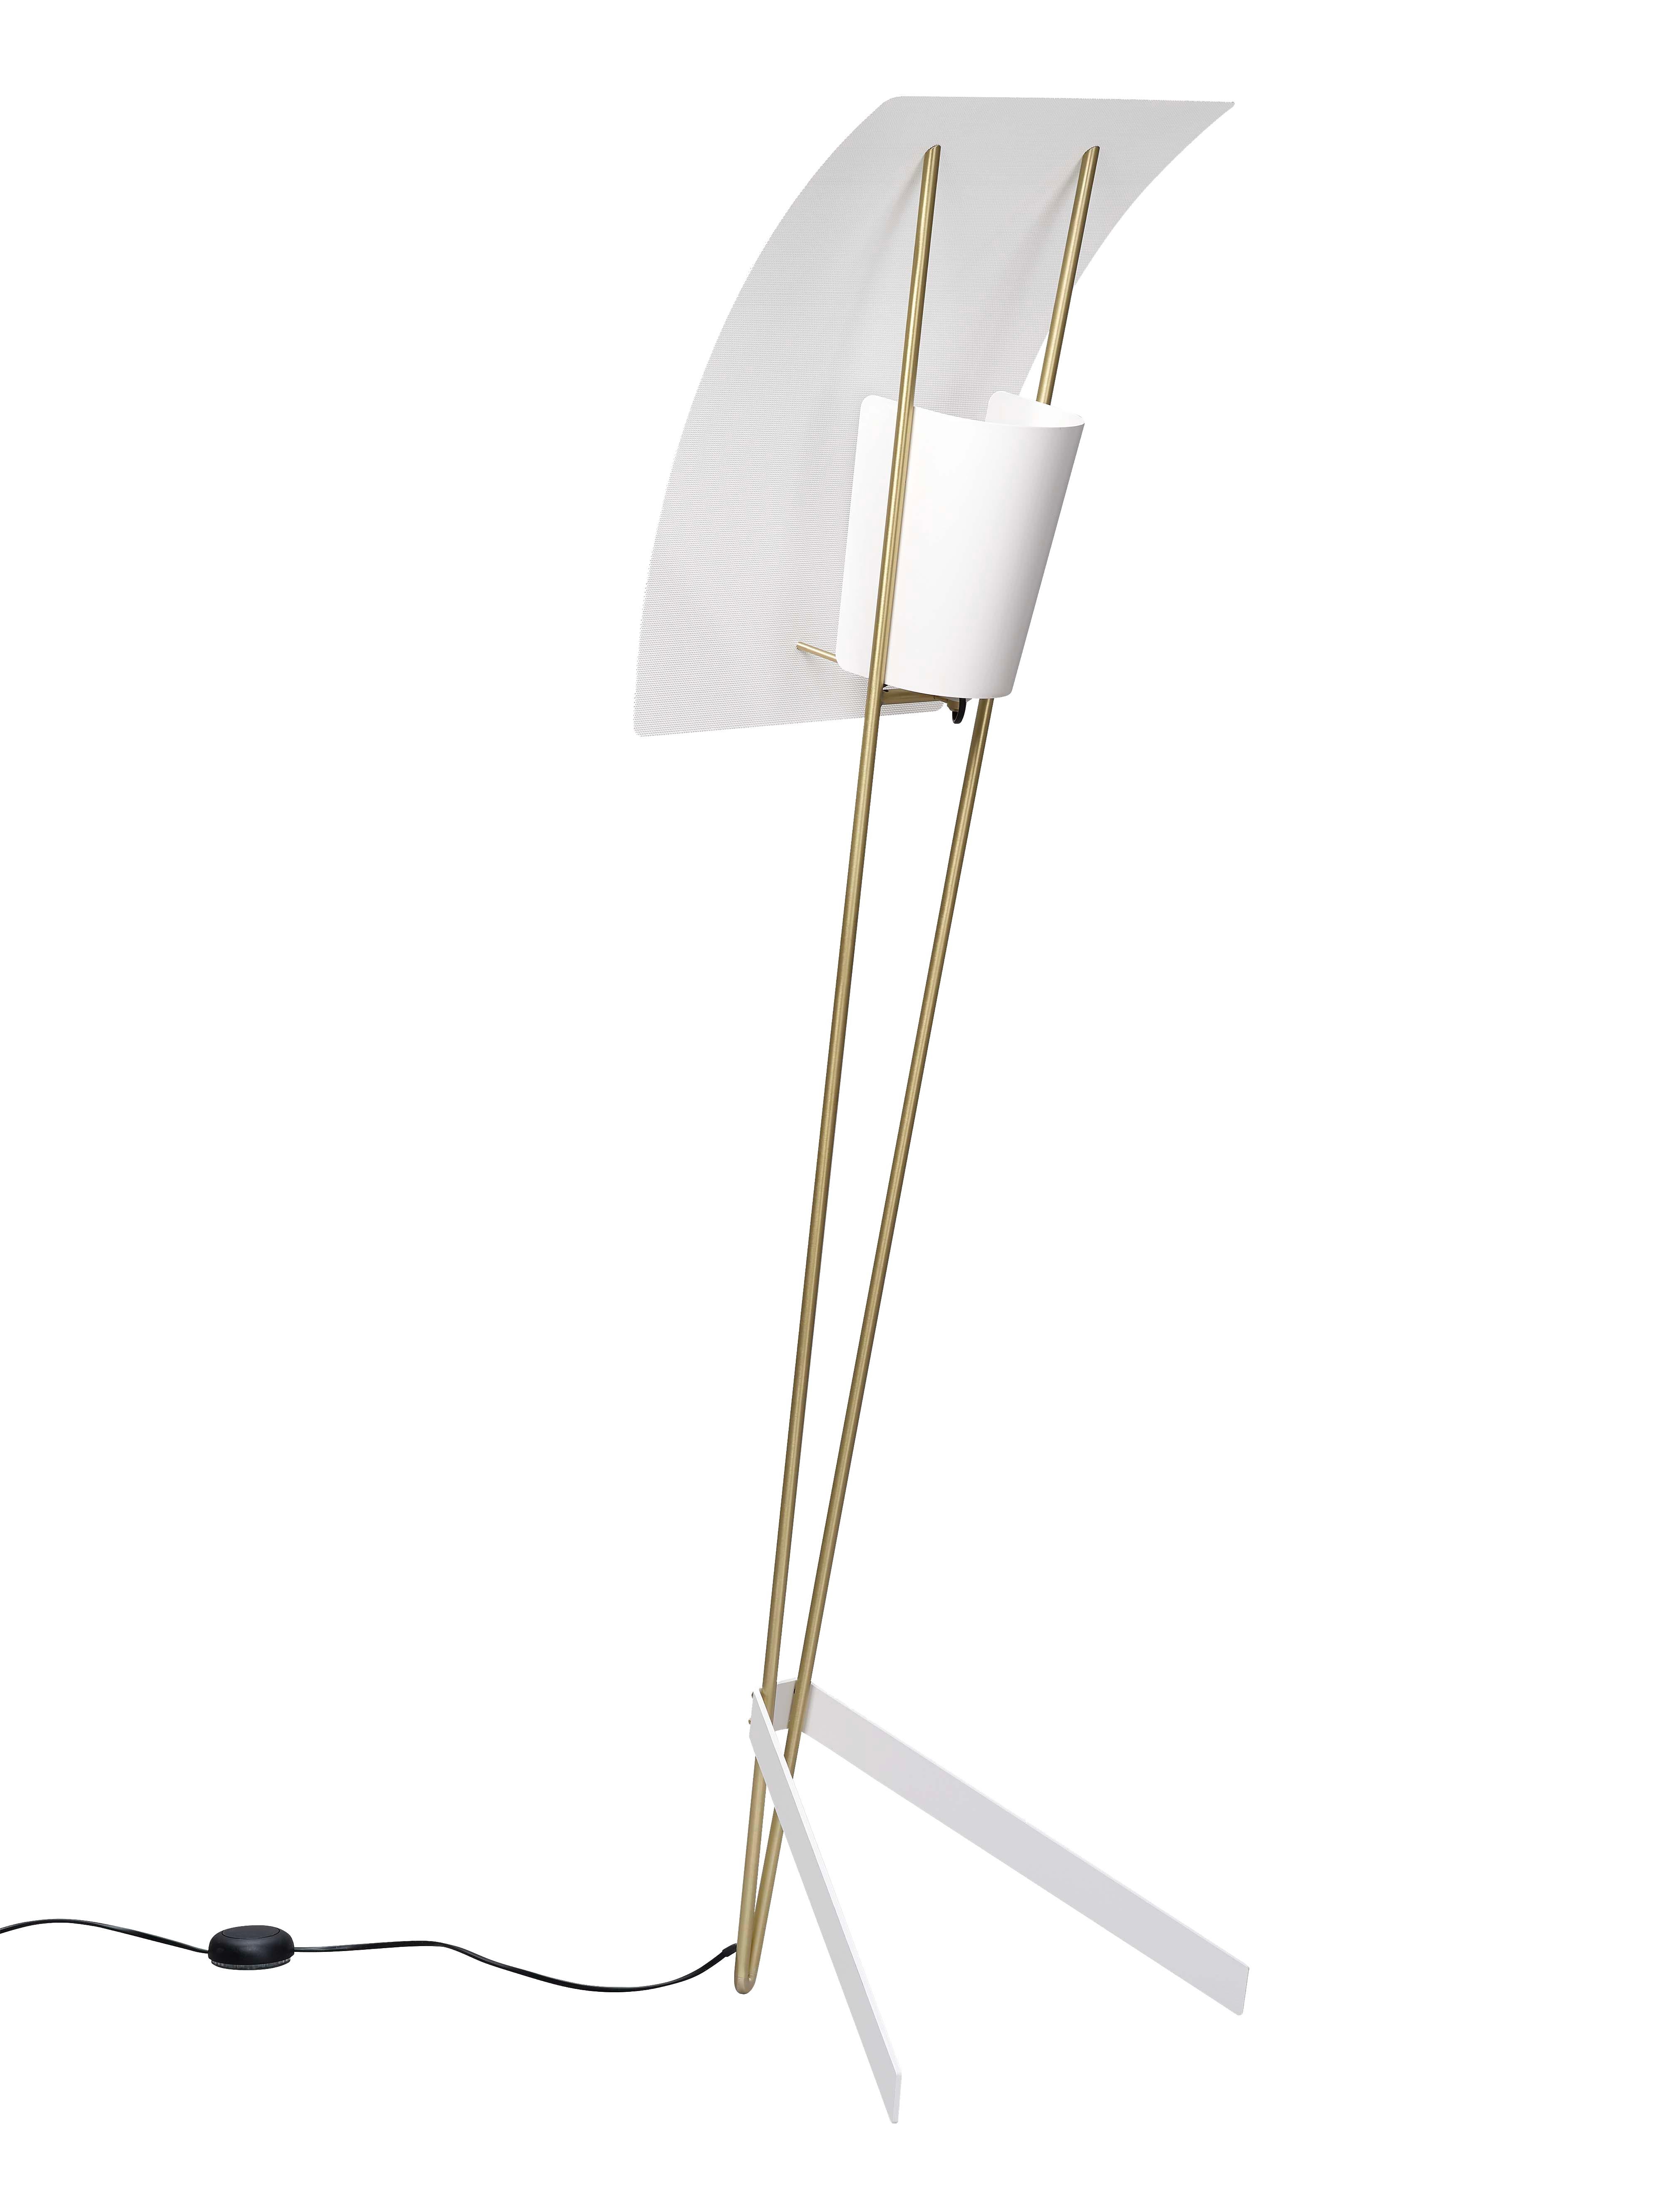 Pierre Guariche Kite Floor Lamp in Black and White for Sammode Studio For Sale 8